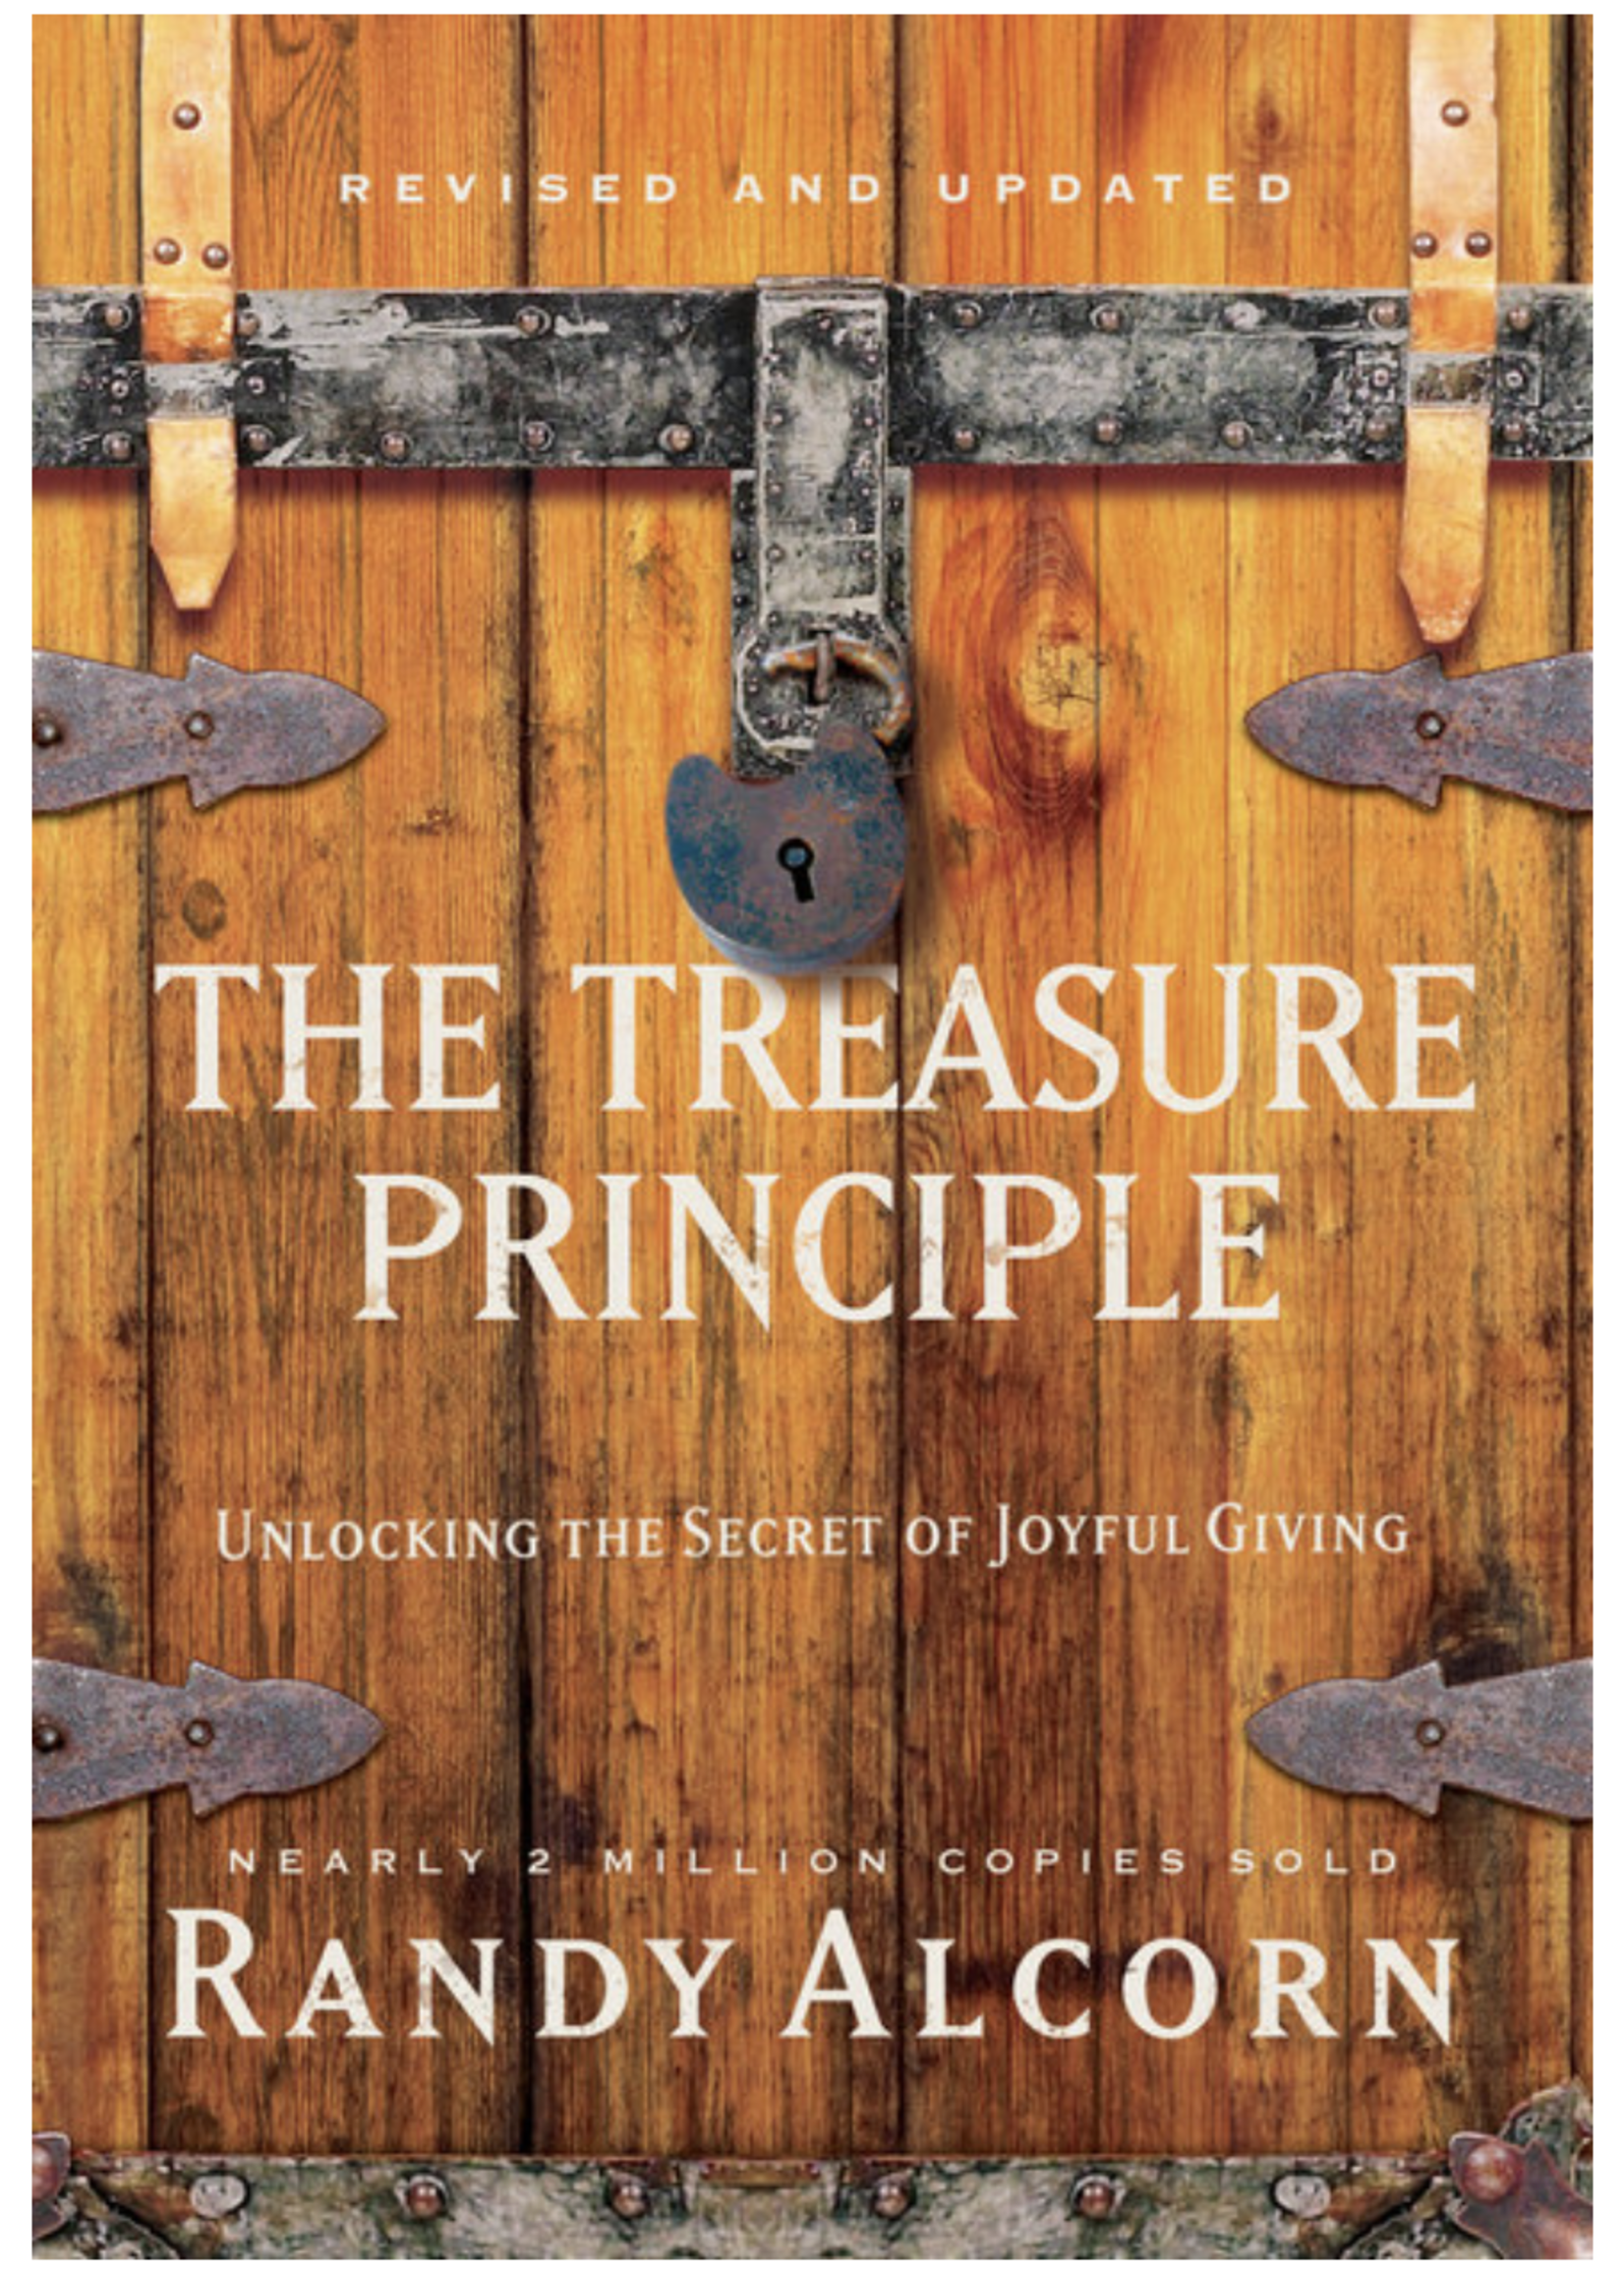 ALCORN, RANDY The Treasure Principle: Unlocking the Secret of Joyful Giving [Randy Alcorn]